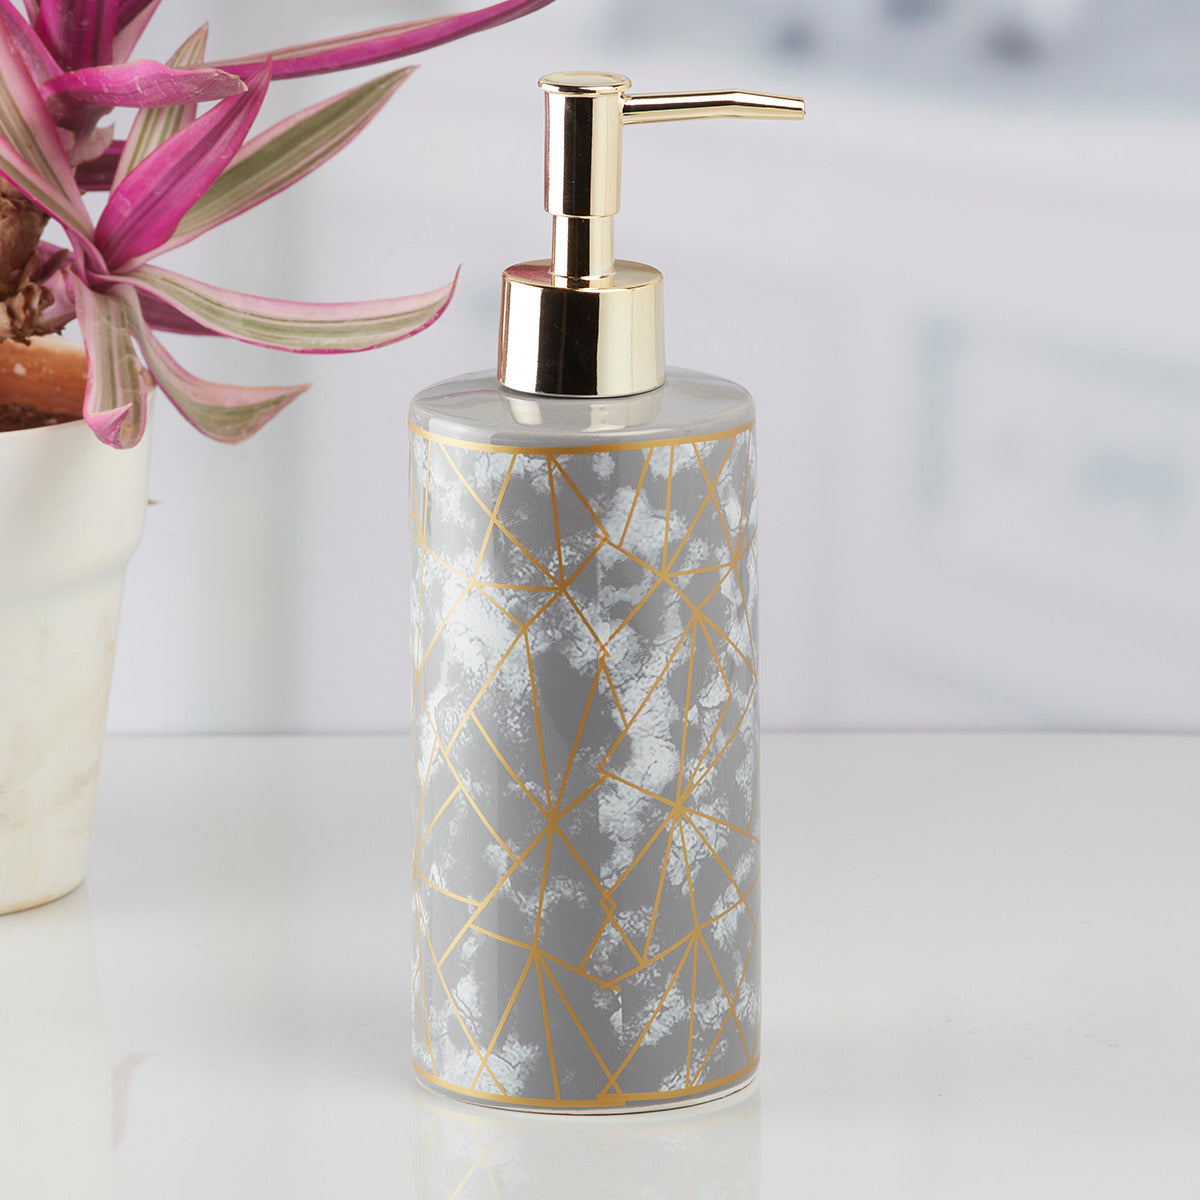 Ceramic Soap Dispenser handwash Pump for Bathroom, Set of 1, Grey/Gold (10208)